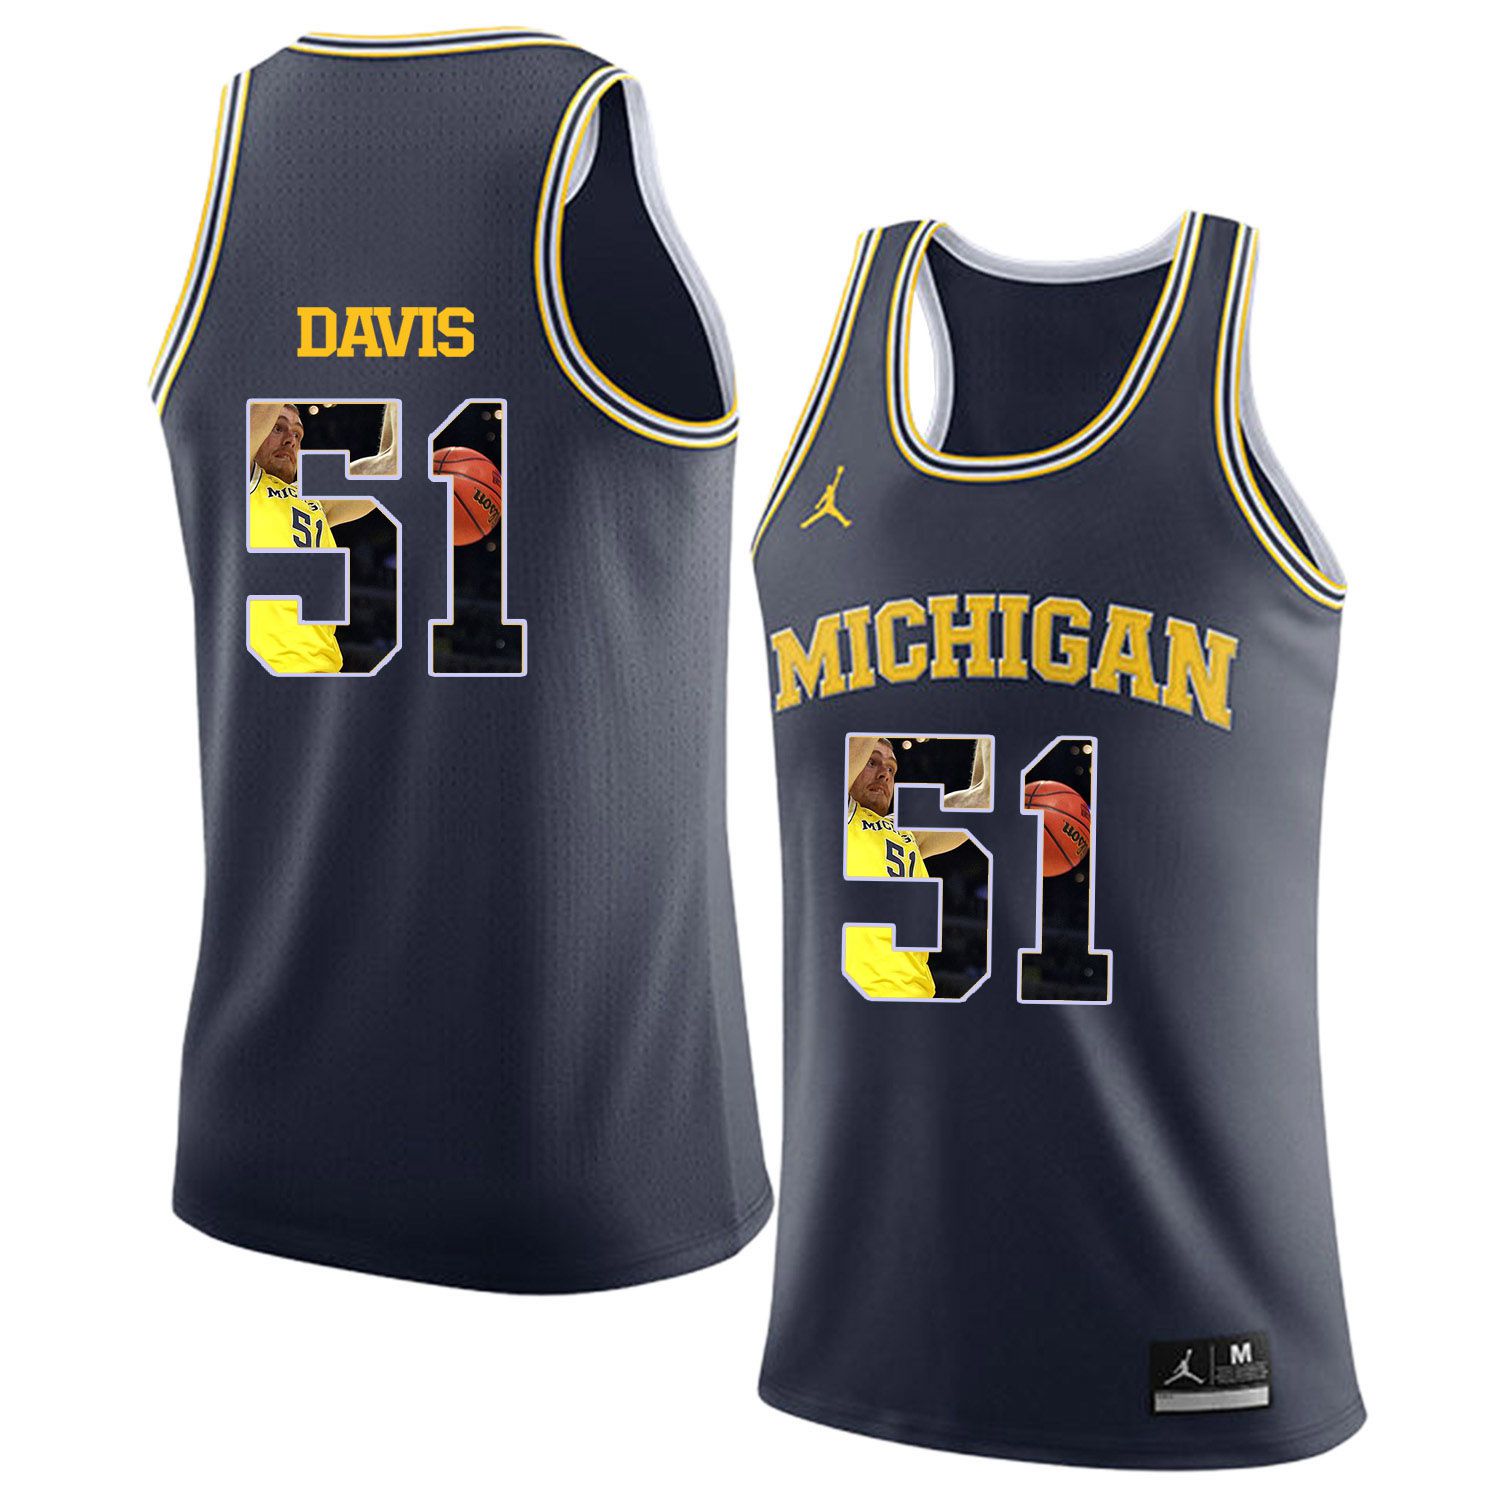 Men Jordan University of Michigan Basketball Navy 51 Davis Fashion Edition Customized NCAA Jerseys